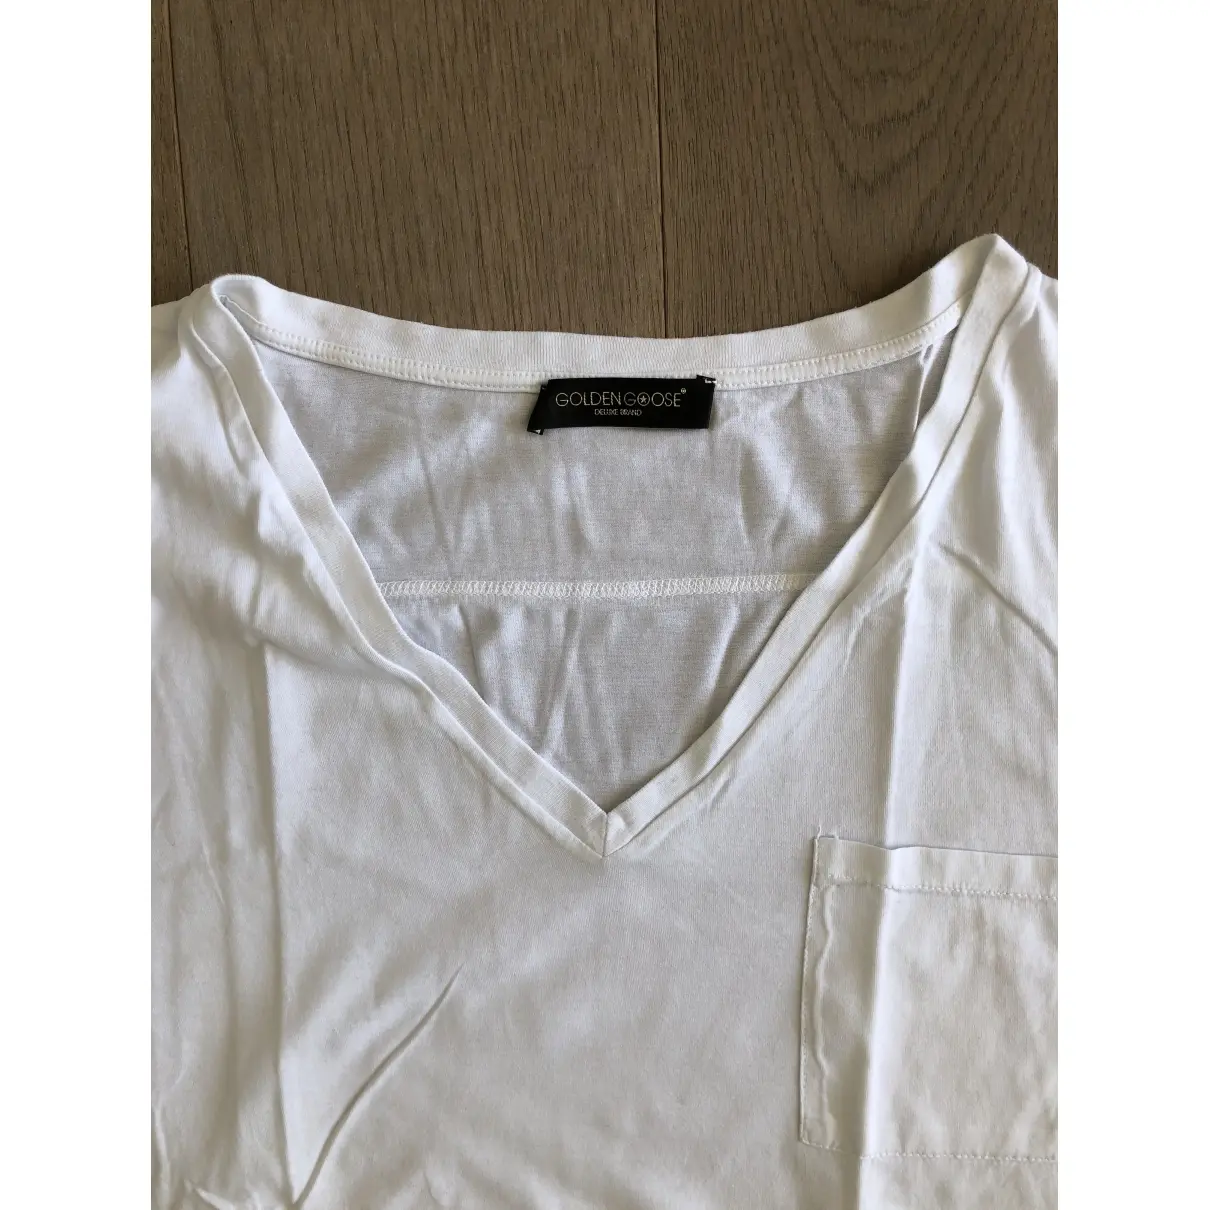 Golden Goose White Cotton T-shirt for sale